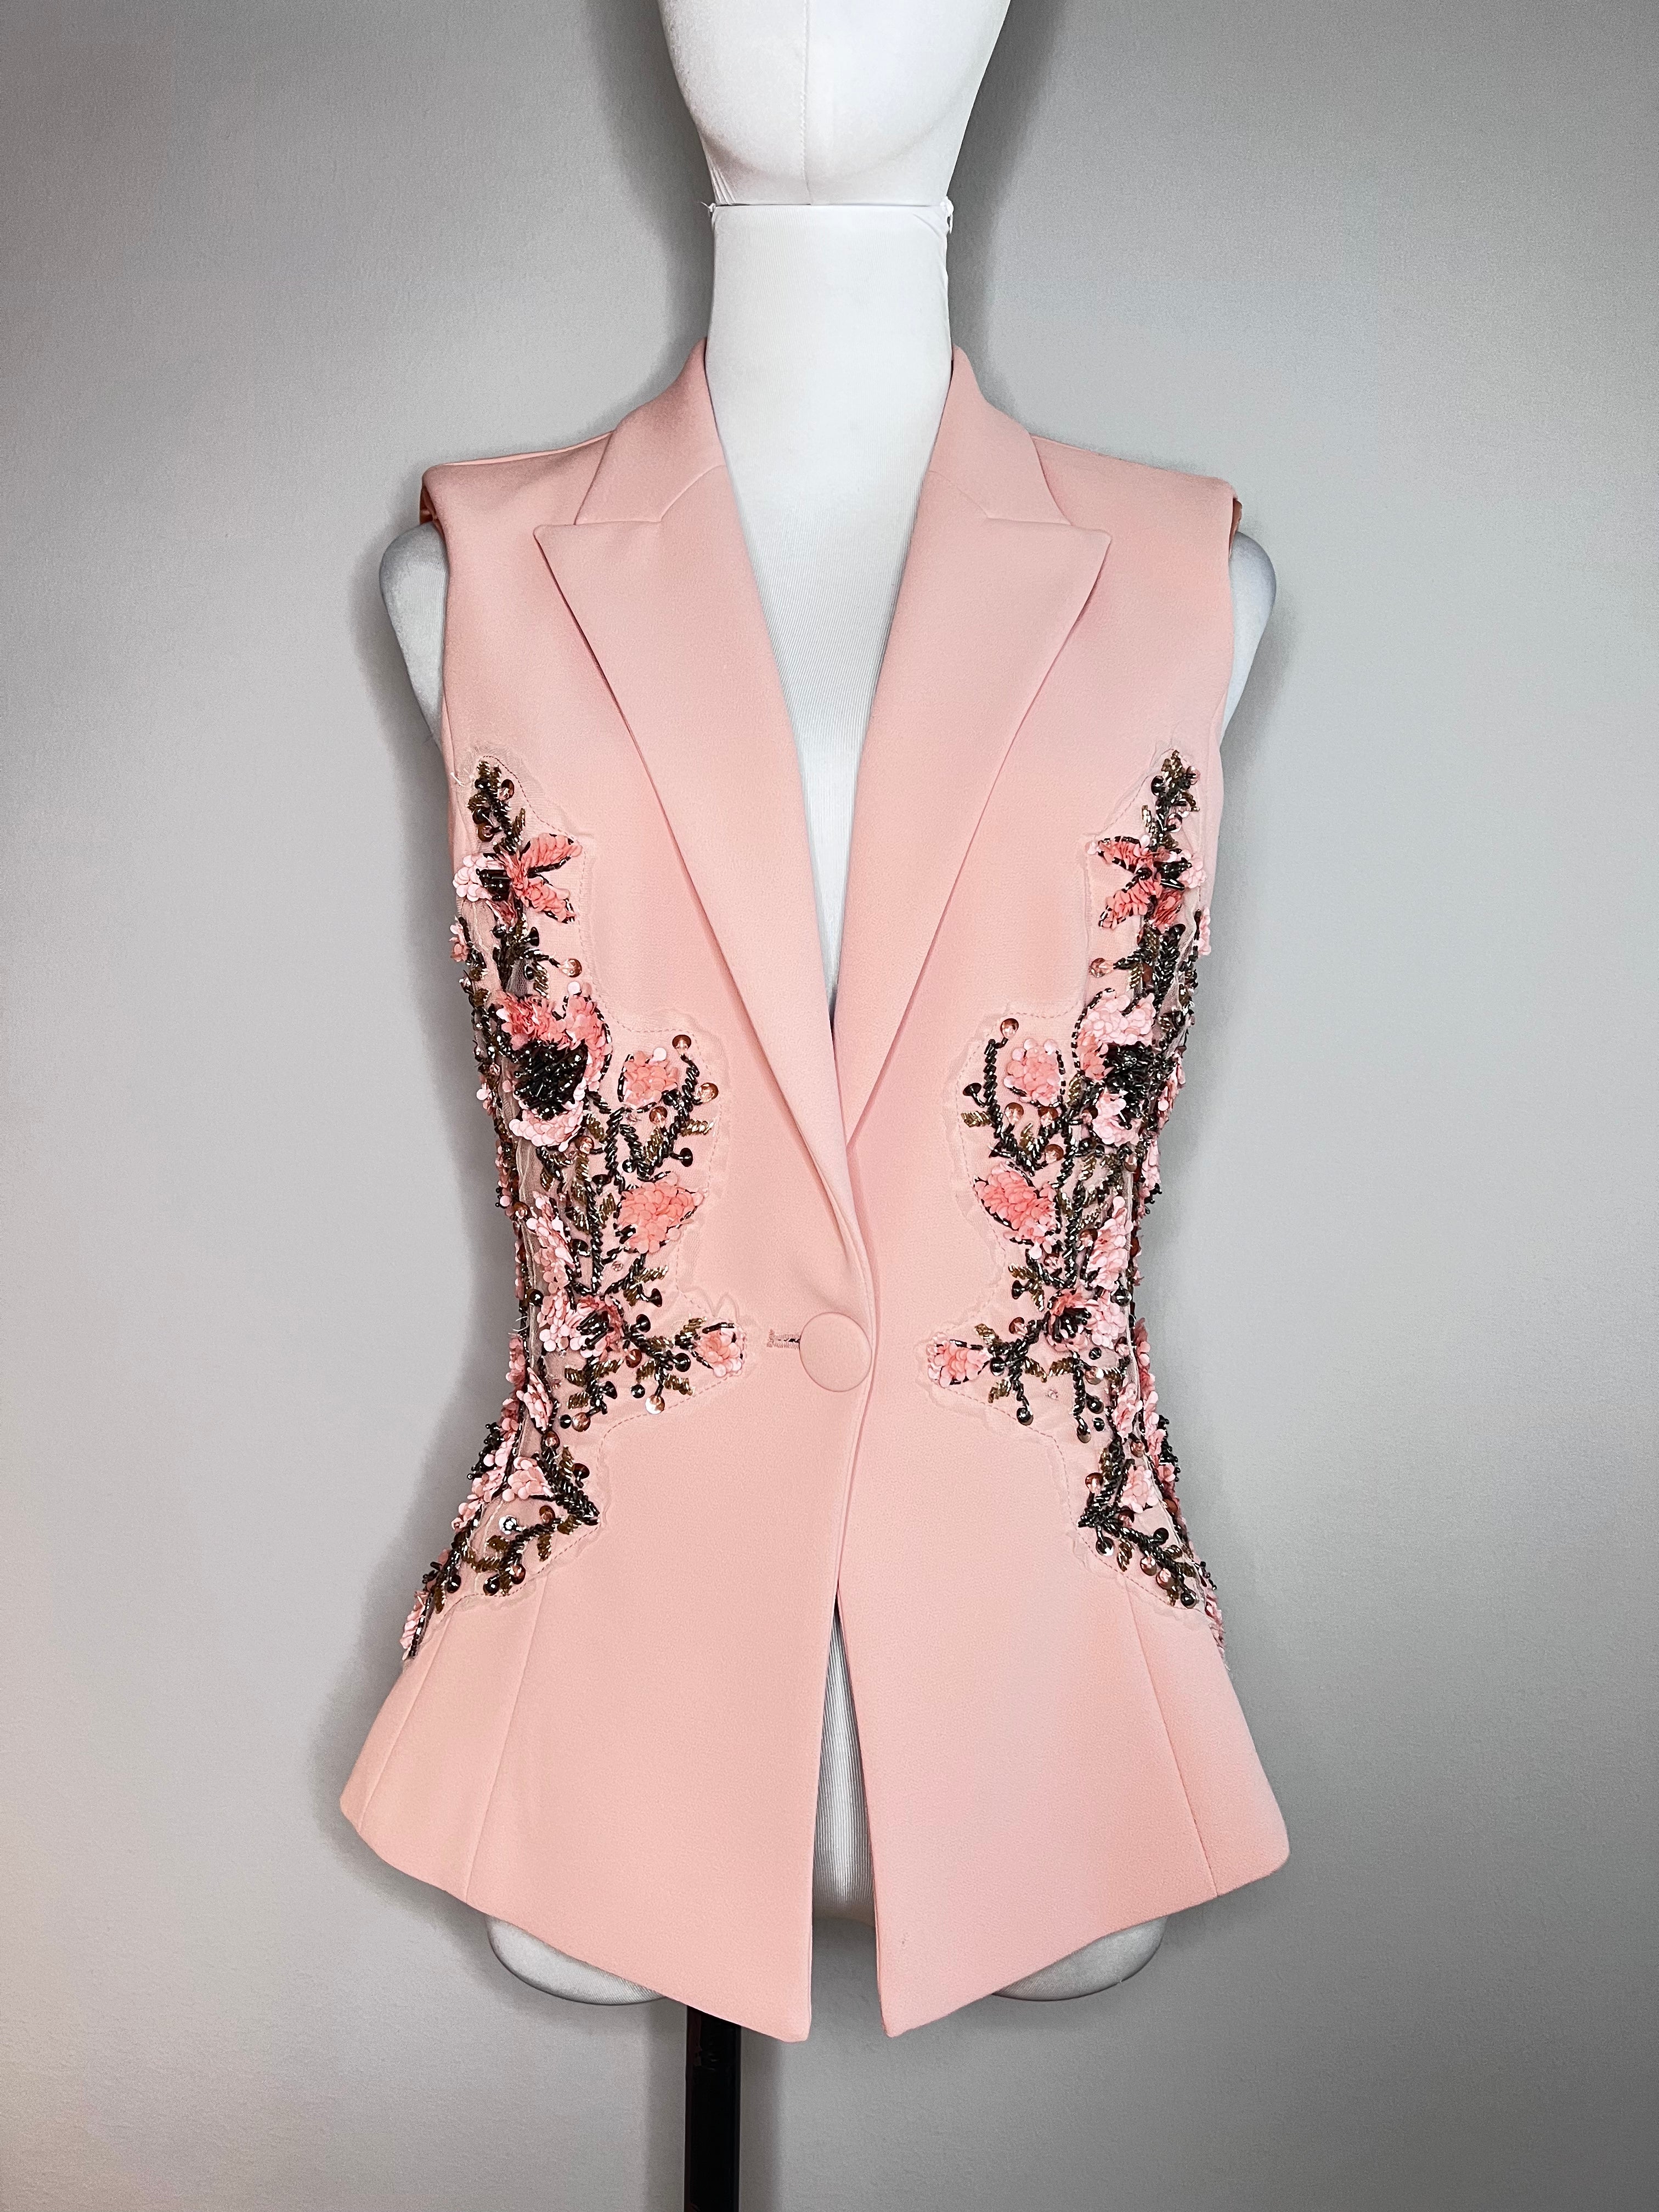 Antique rose sleeveless jacket with embroideries - ELISABETTA FRANCHI